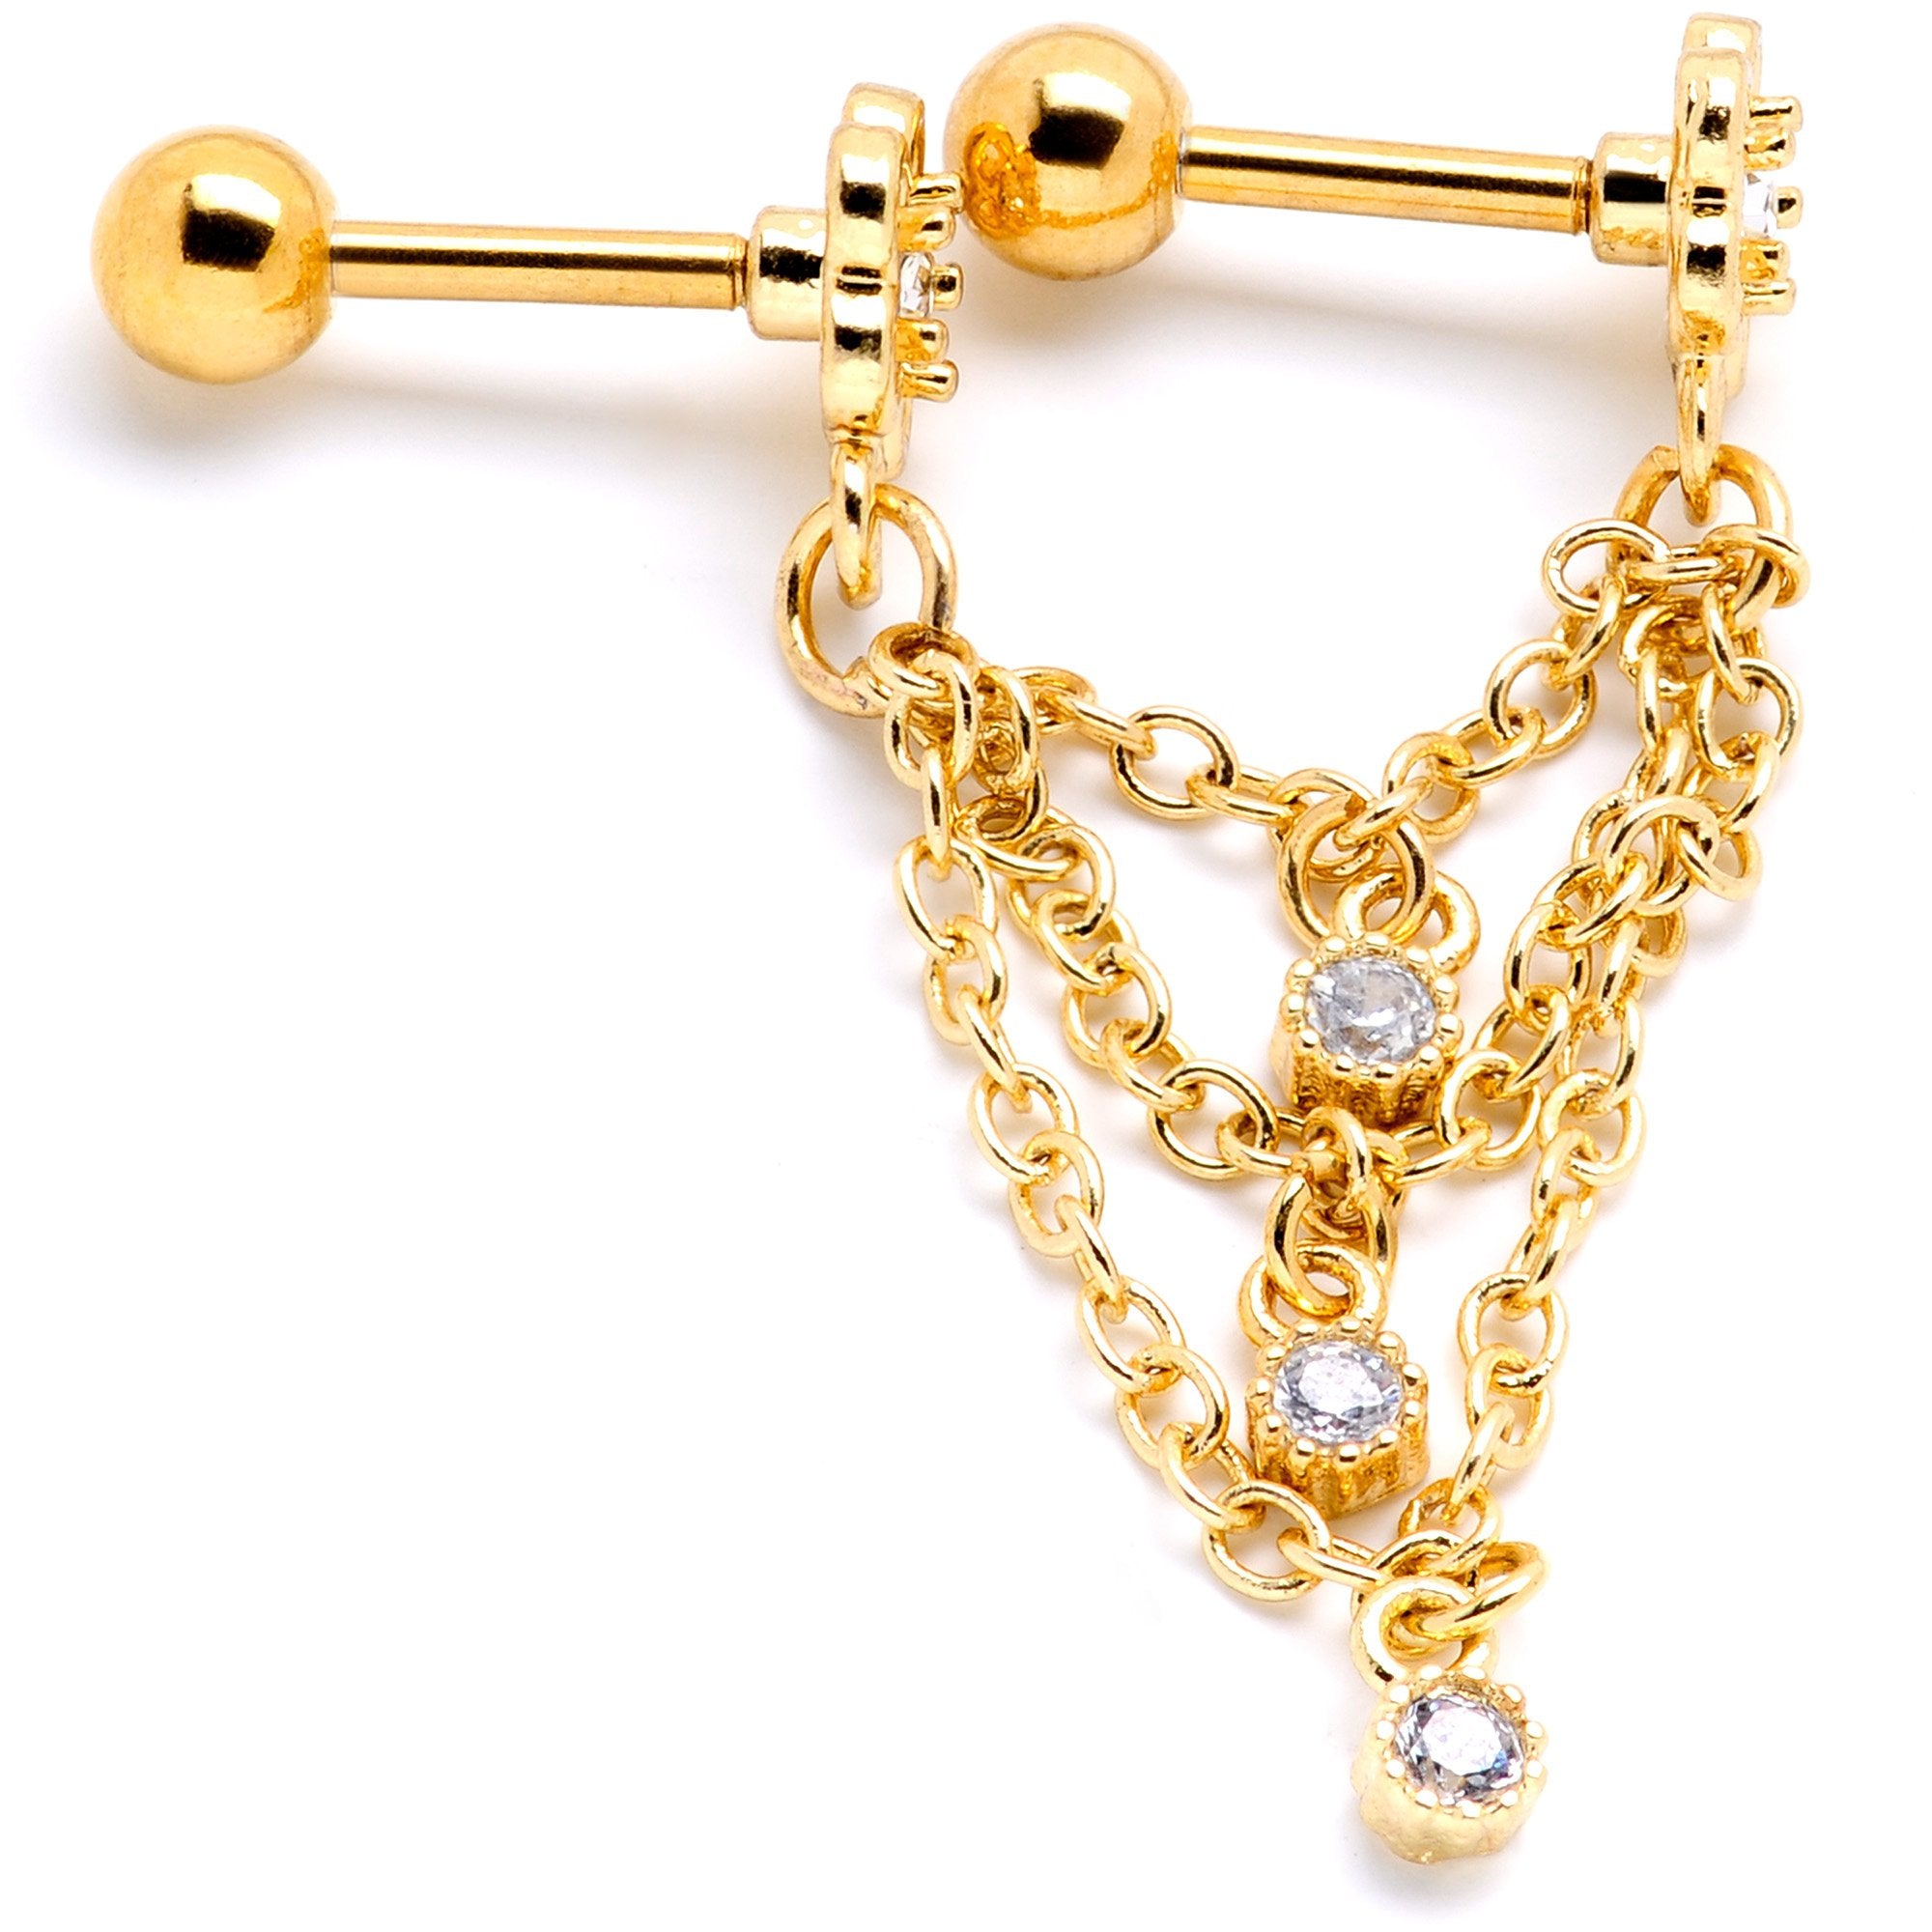 16 Gauge 1/4 Clear Gem Gold PVD Flower Cartilage Chain Earring